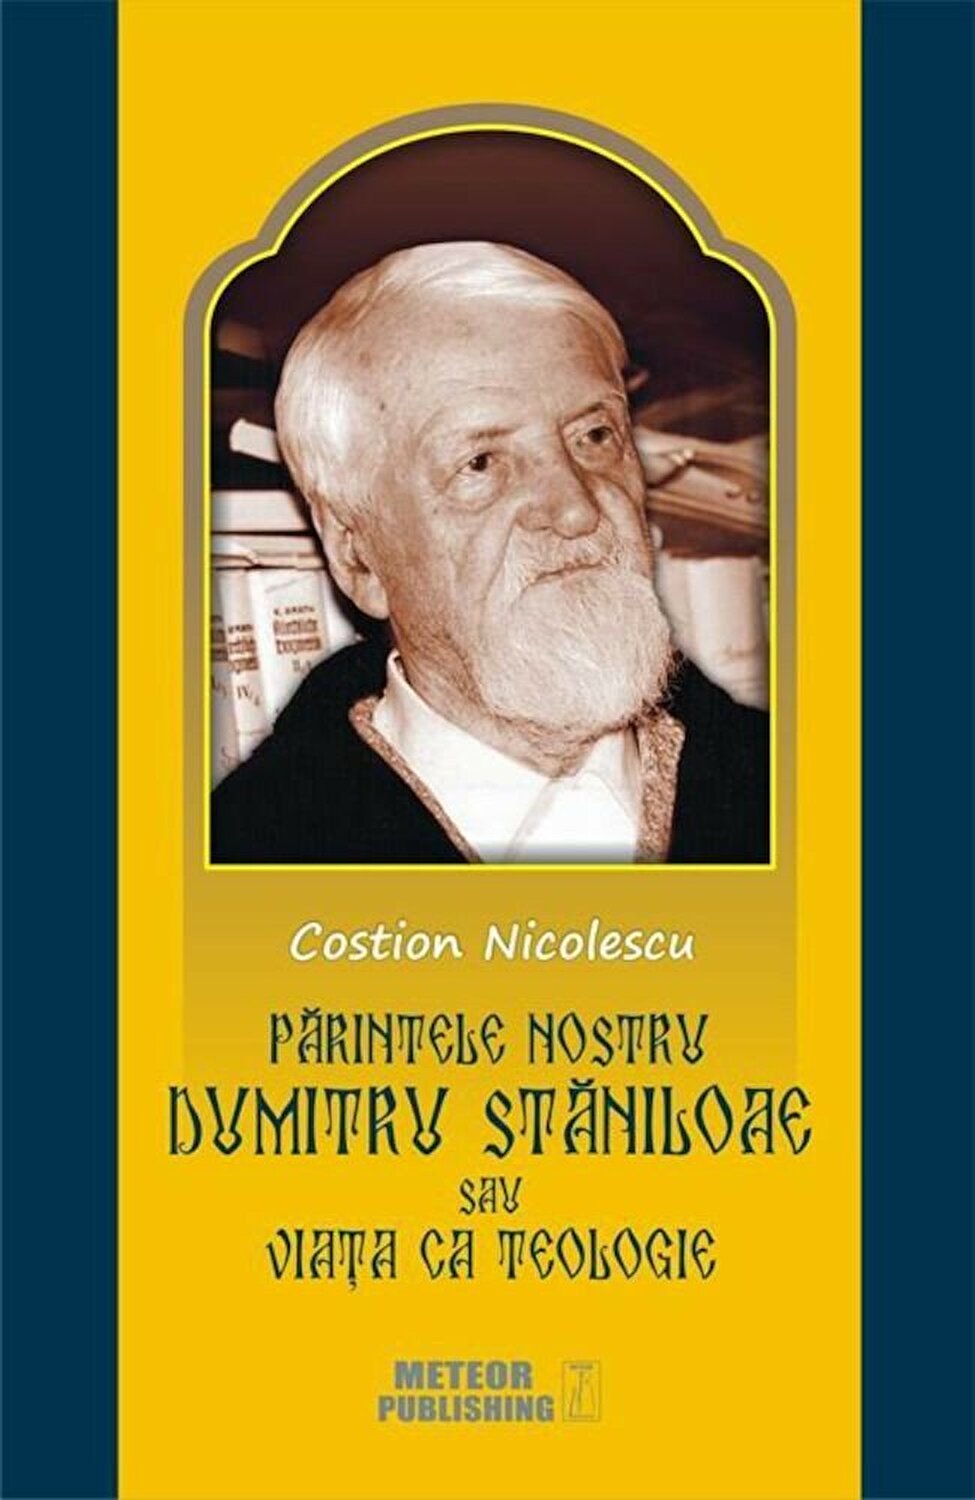 Parintele nostru Dumitru Staniloaie sau viata ca teologie | Costion Nicolescu